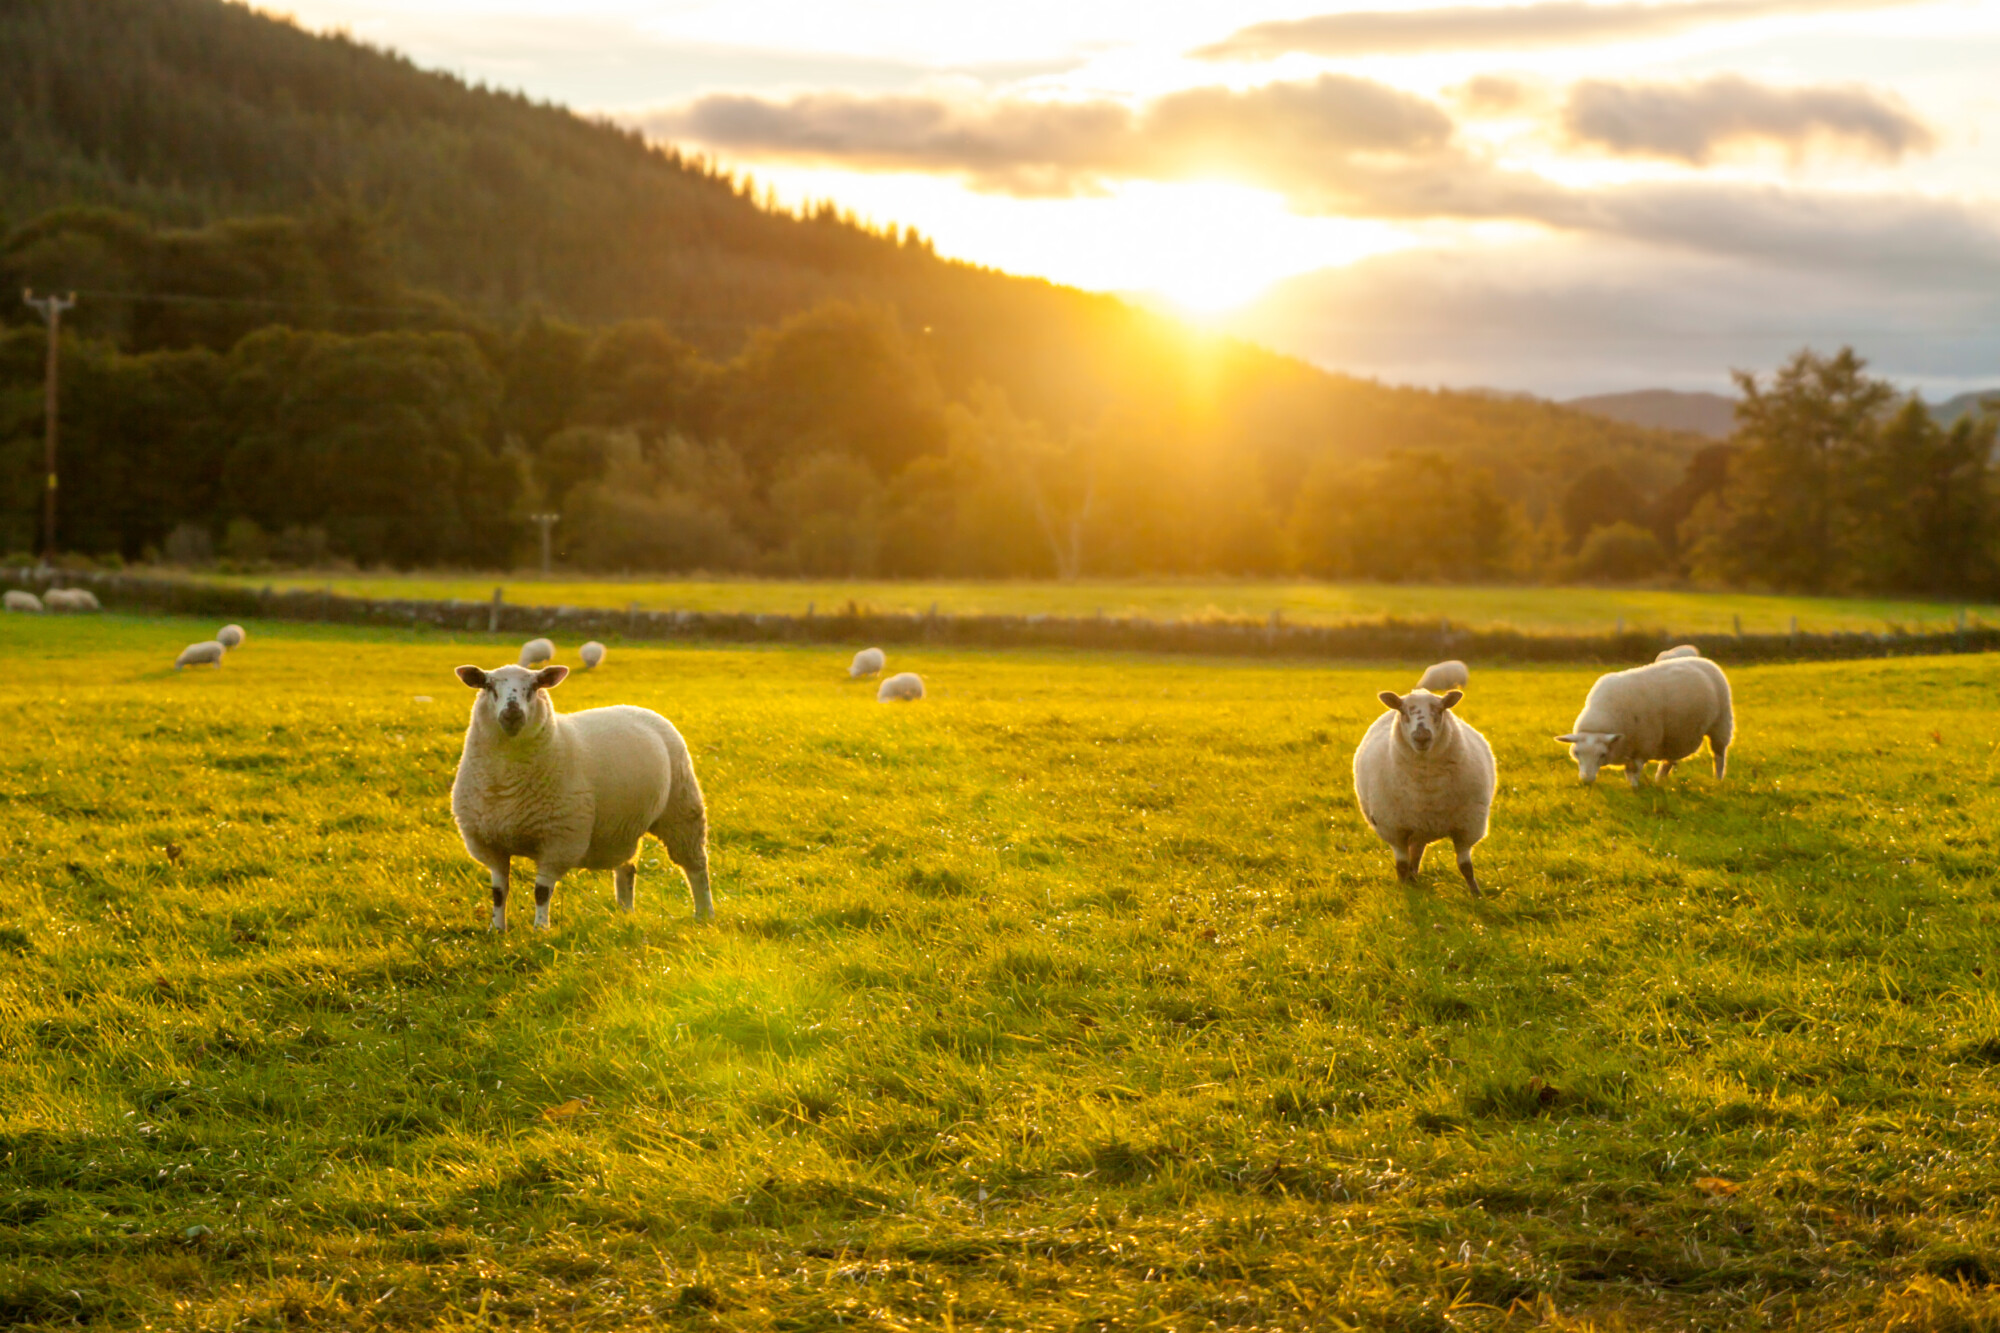 Survey reveals the farming community remains optimistic despite industry stress 